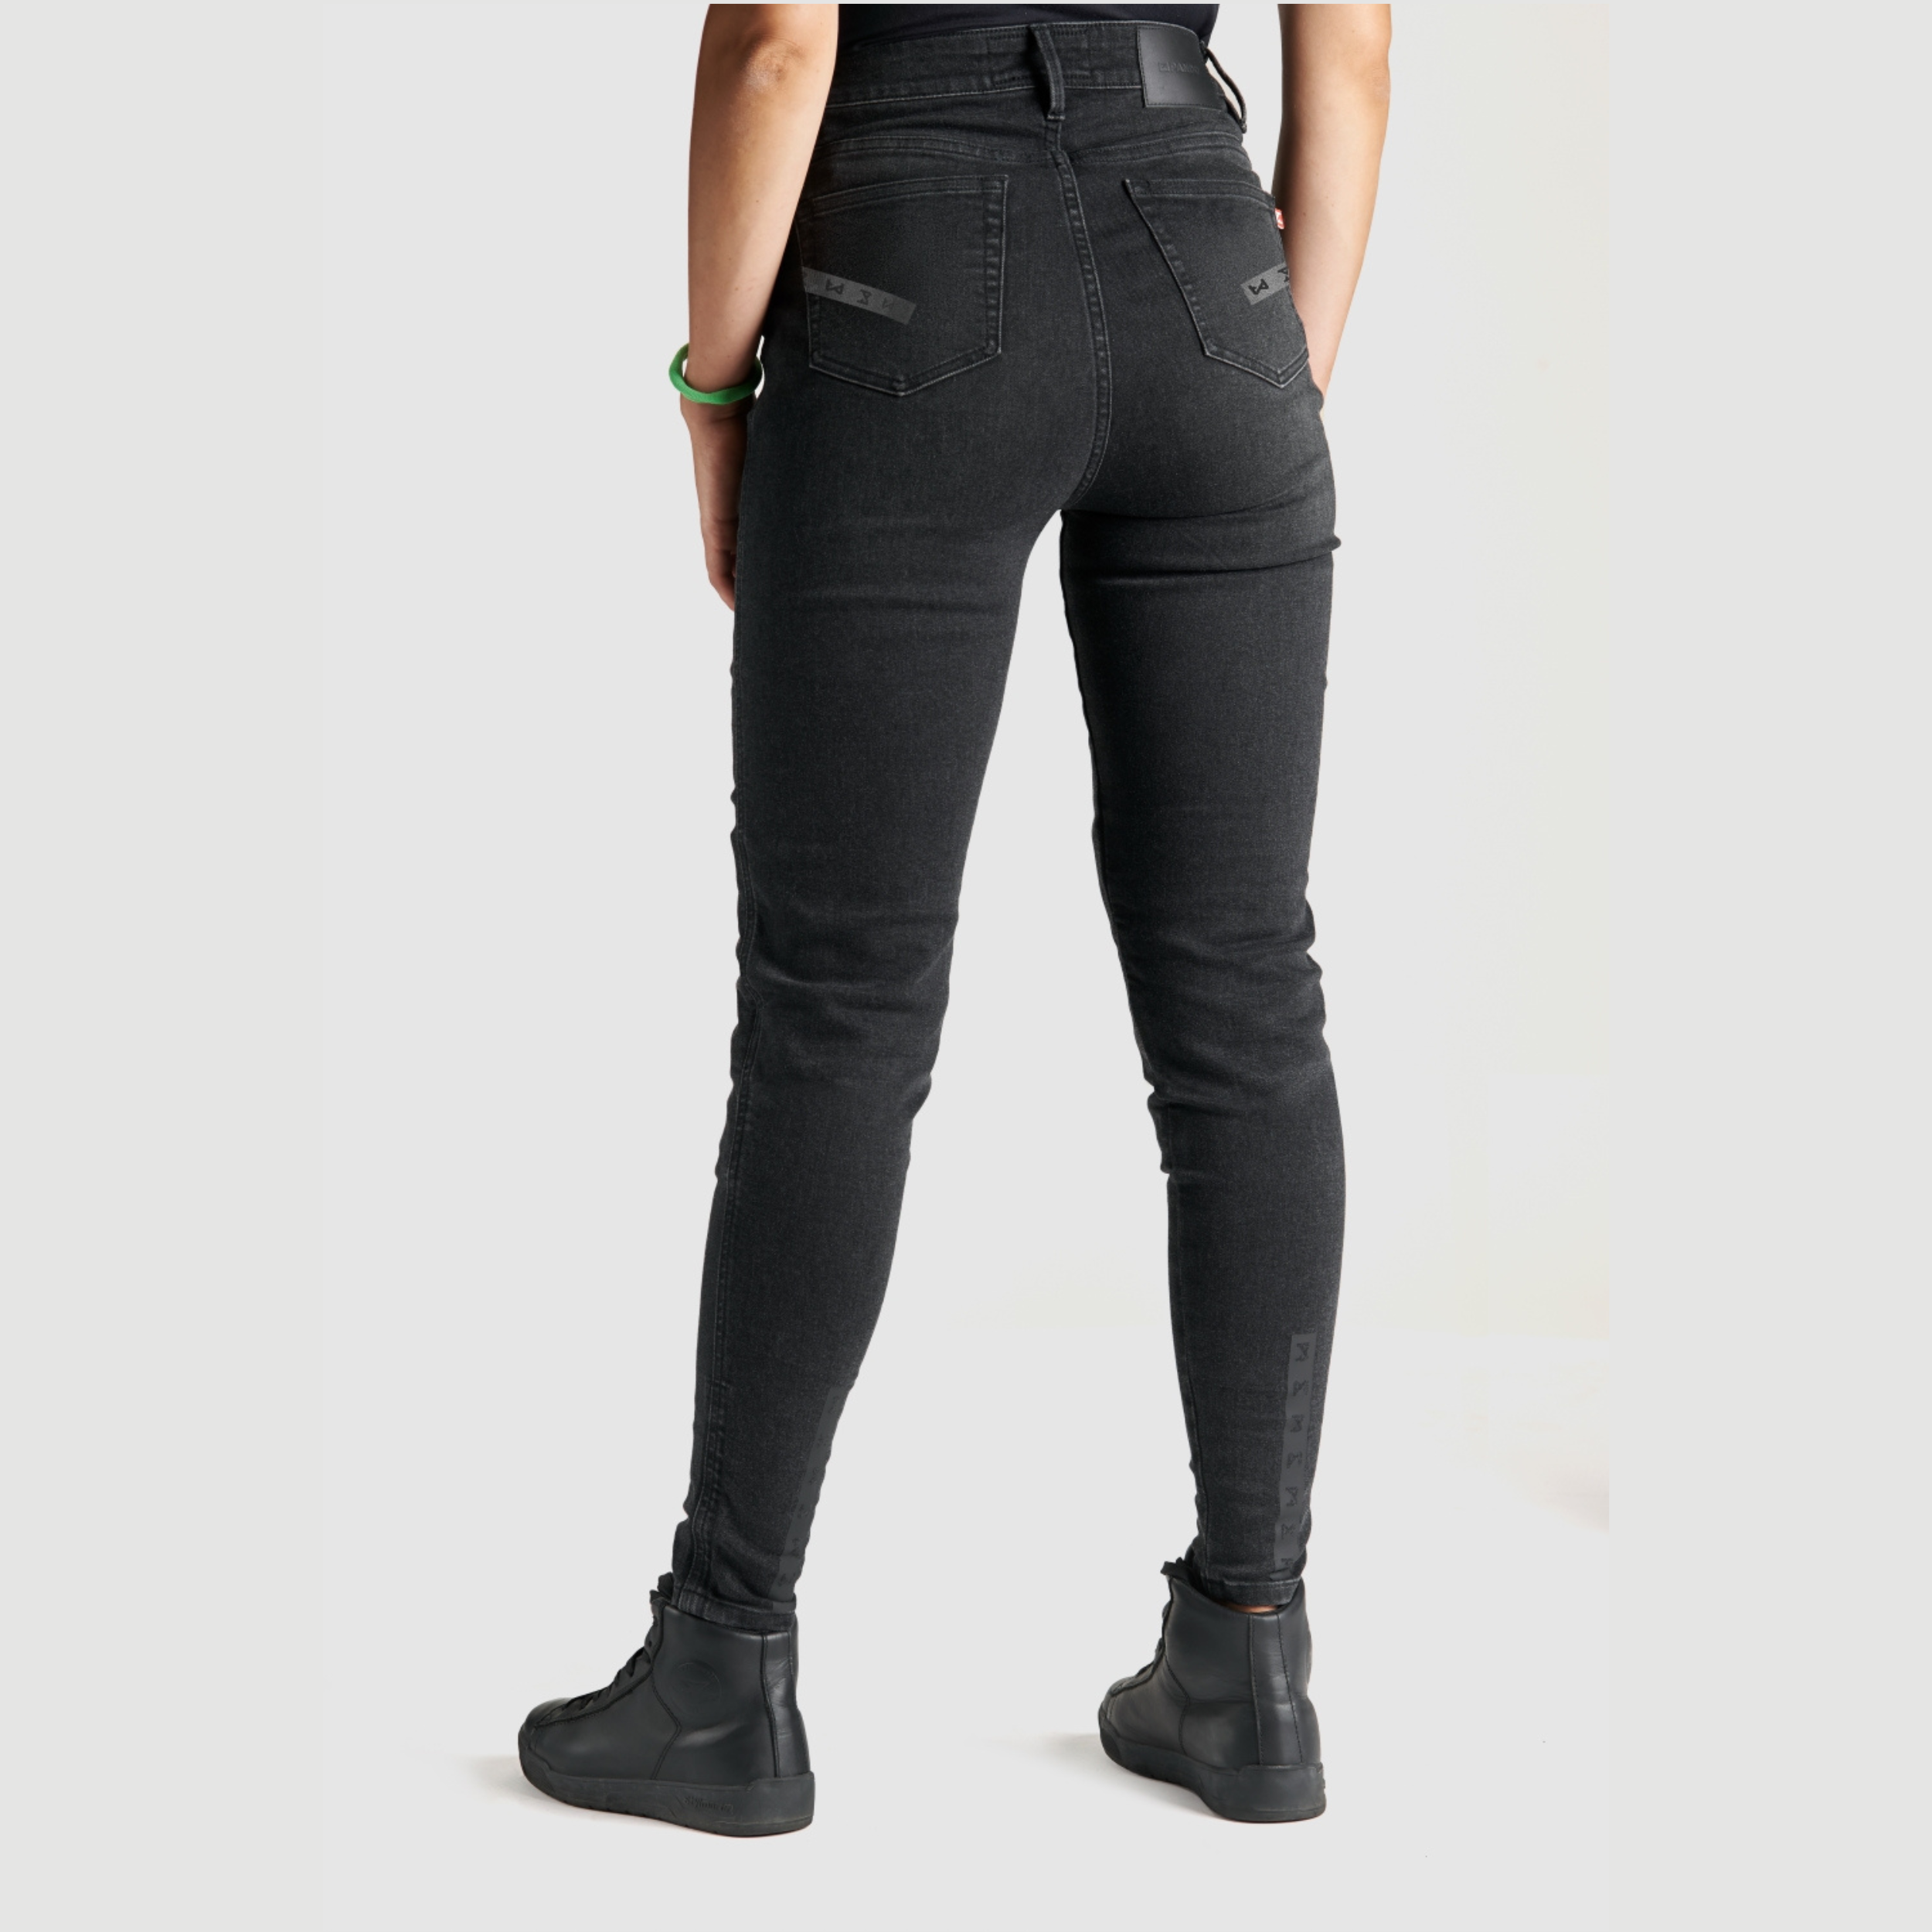 Pando Moto Kusari Cor 01 Women's Jeans, Length 30 - Black